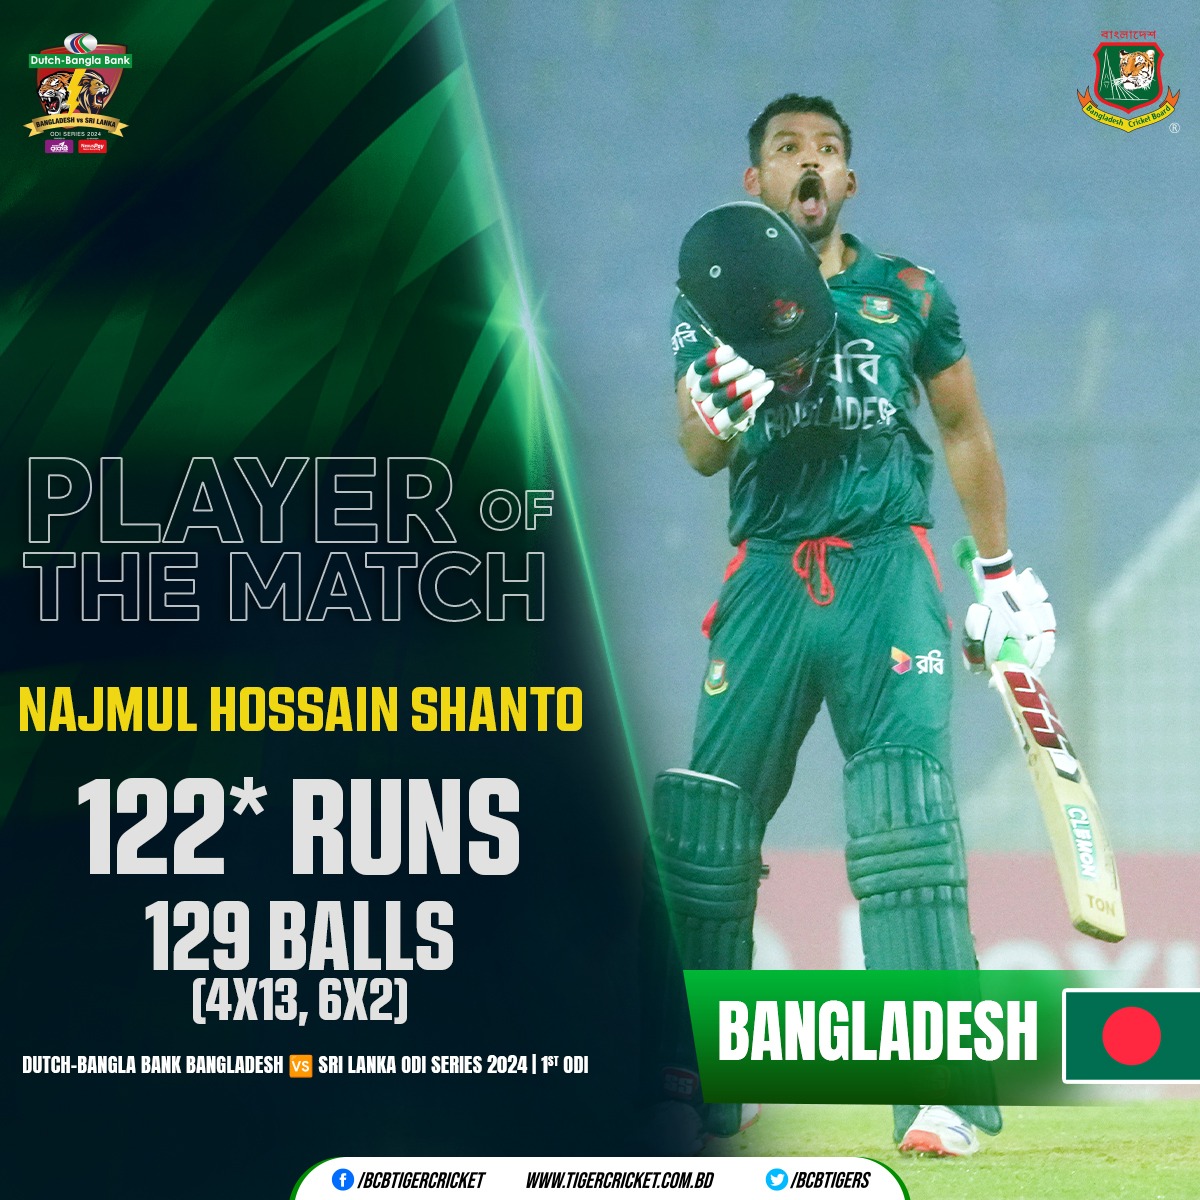 Dutch-Bangla Bank Bangladesh 🆚 Sri Lanka ODI Series 2024

Dutch-Bangla Bank Player of the Match | 1st ODI
Najmul Hossain Shanto (Bangladesh) | 122*(129) Runs

#BCB #Cricket #BANvSL #BDCricket #LiveCrcket #Bangladesh #HomeSeries #odiseries